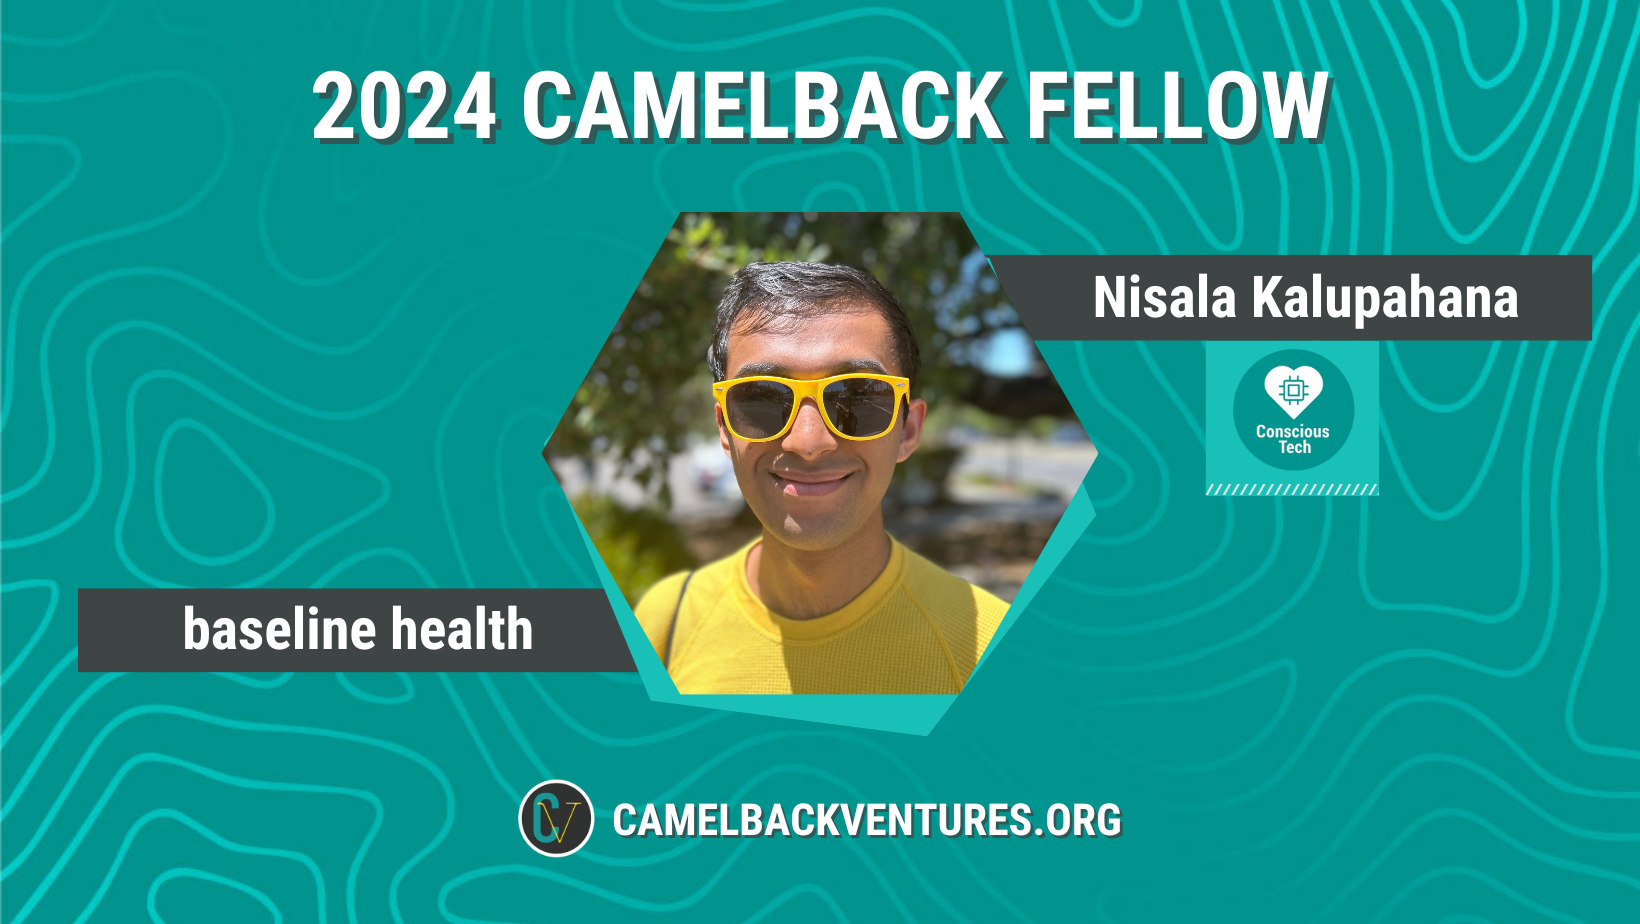 2024 Camelback Conscious Tech Fellow Nisala Kalupahana, Founder of baseline health